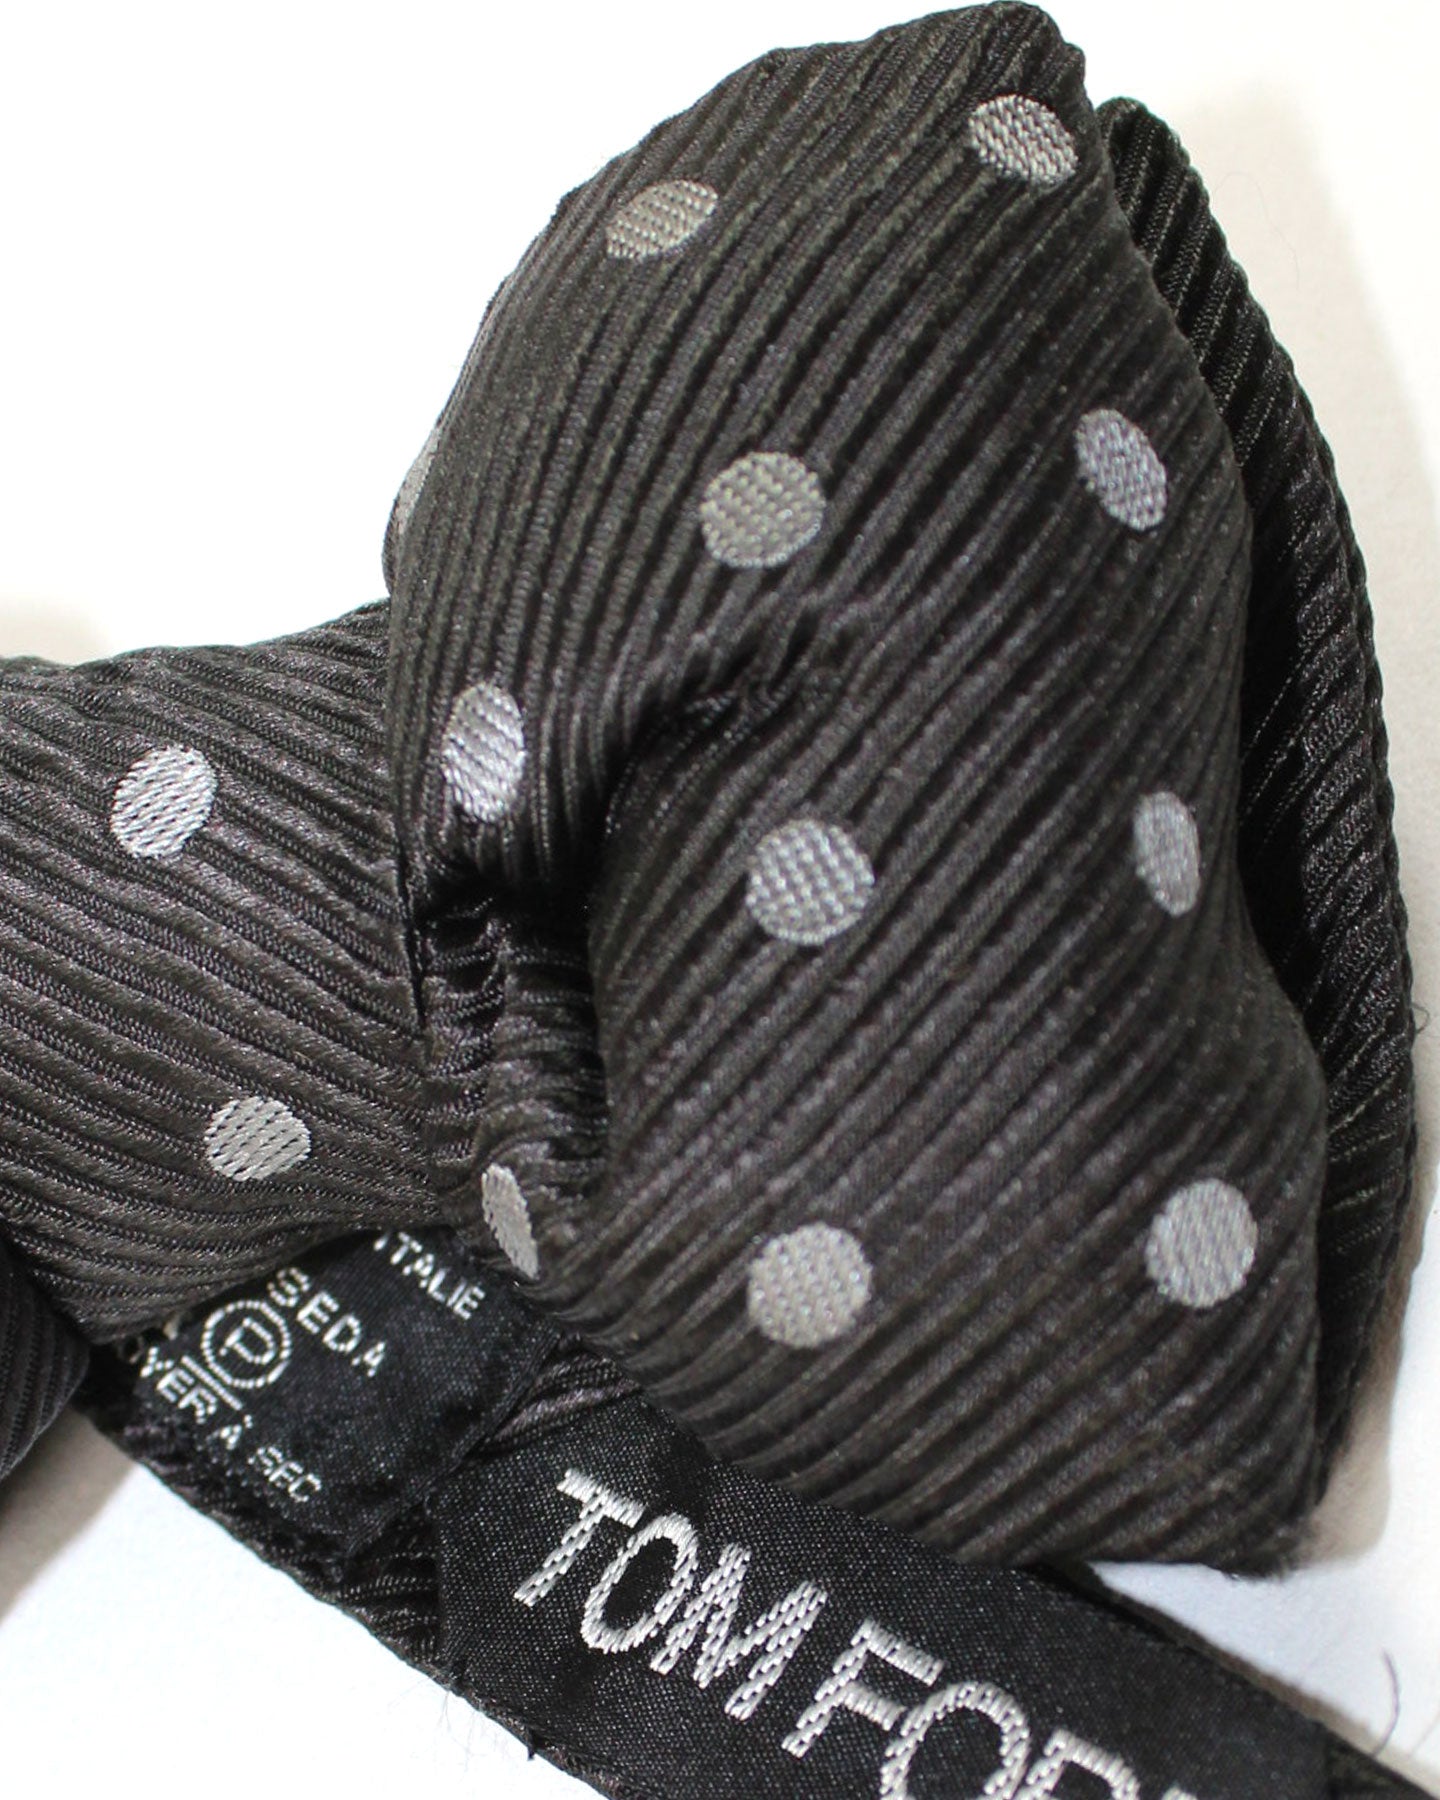 Tom Ford Silk Bow Tie Black Gray Grosgrain Polka Dots - Tie Deals